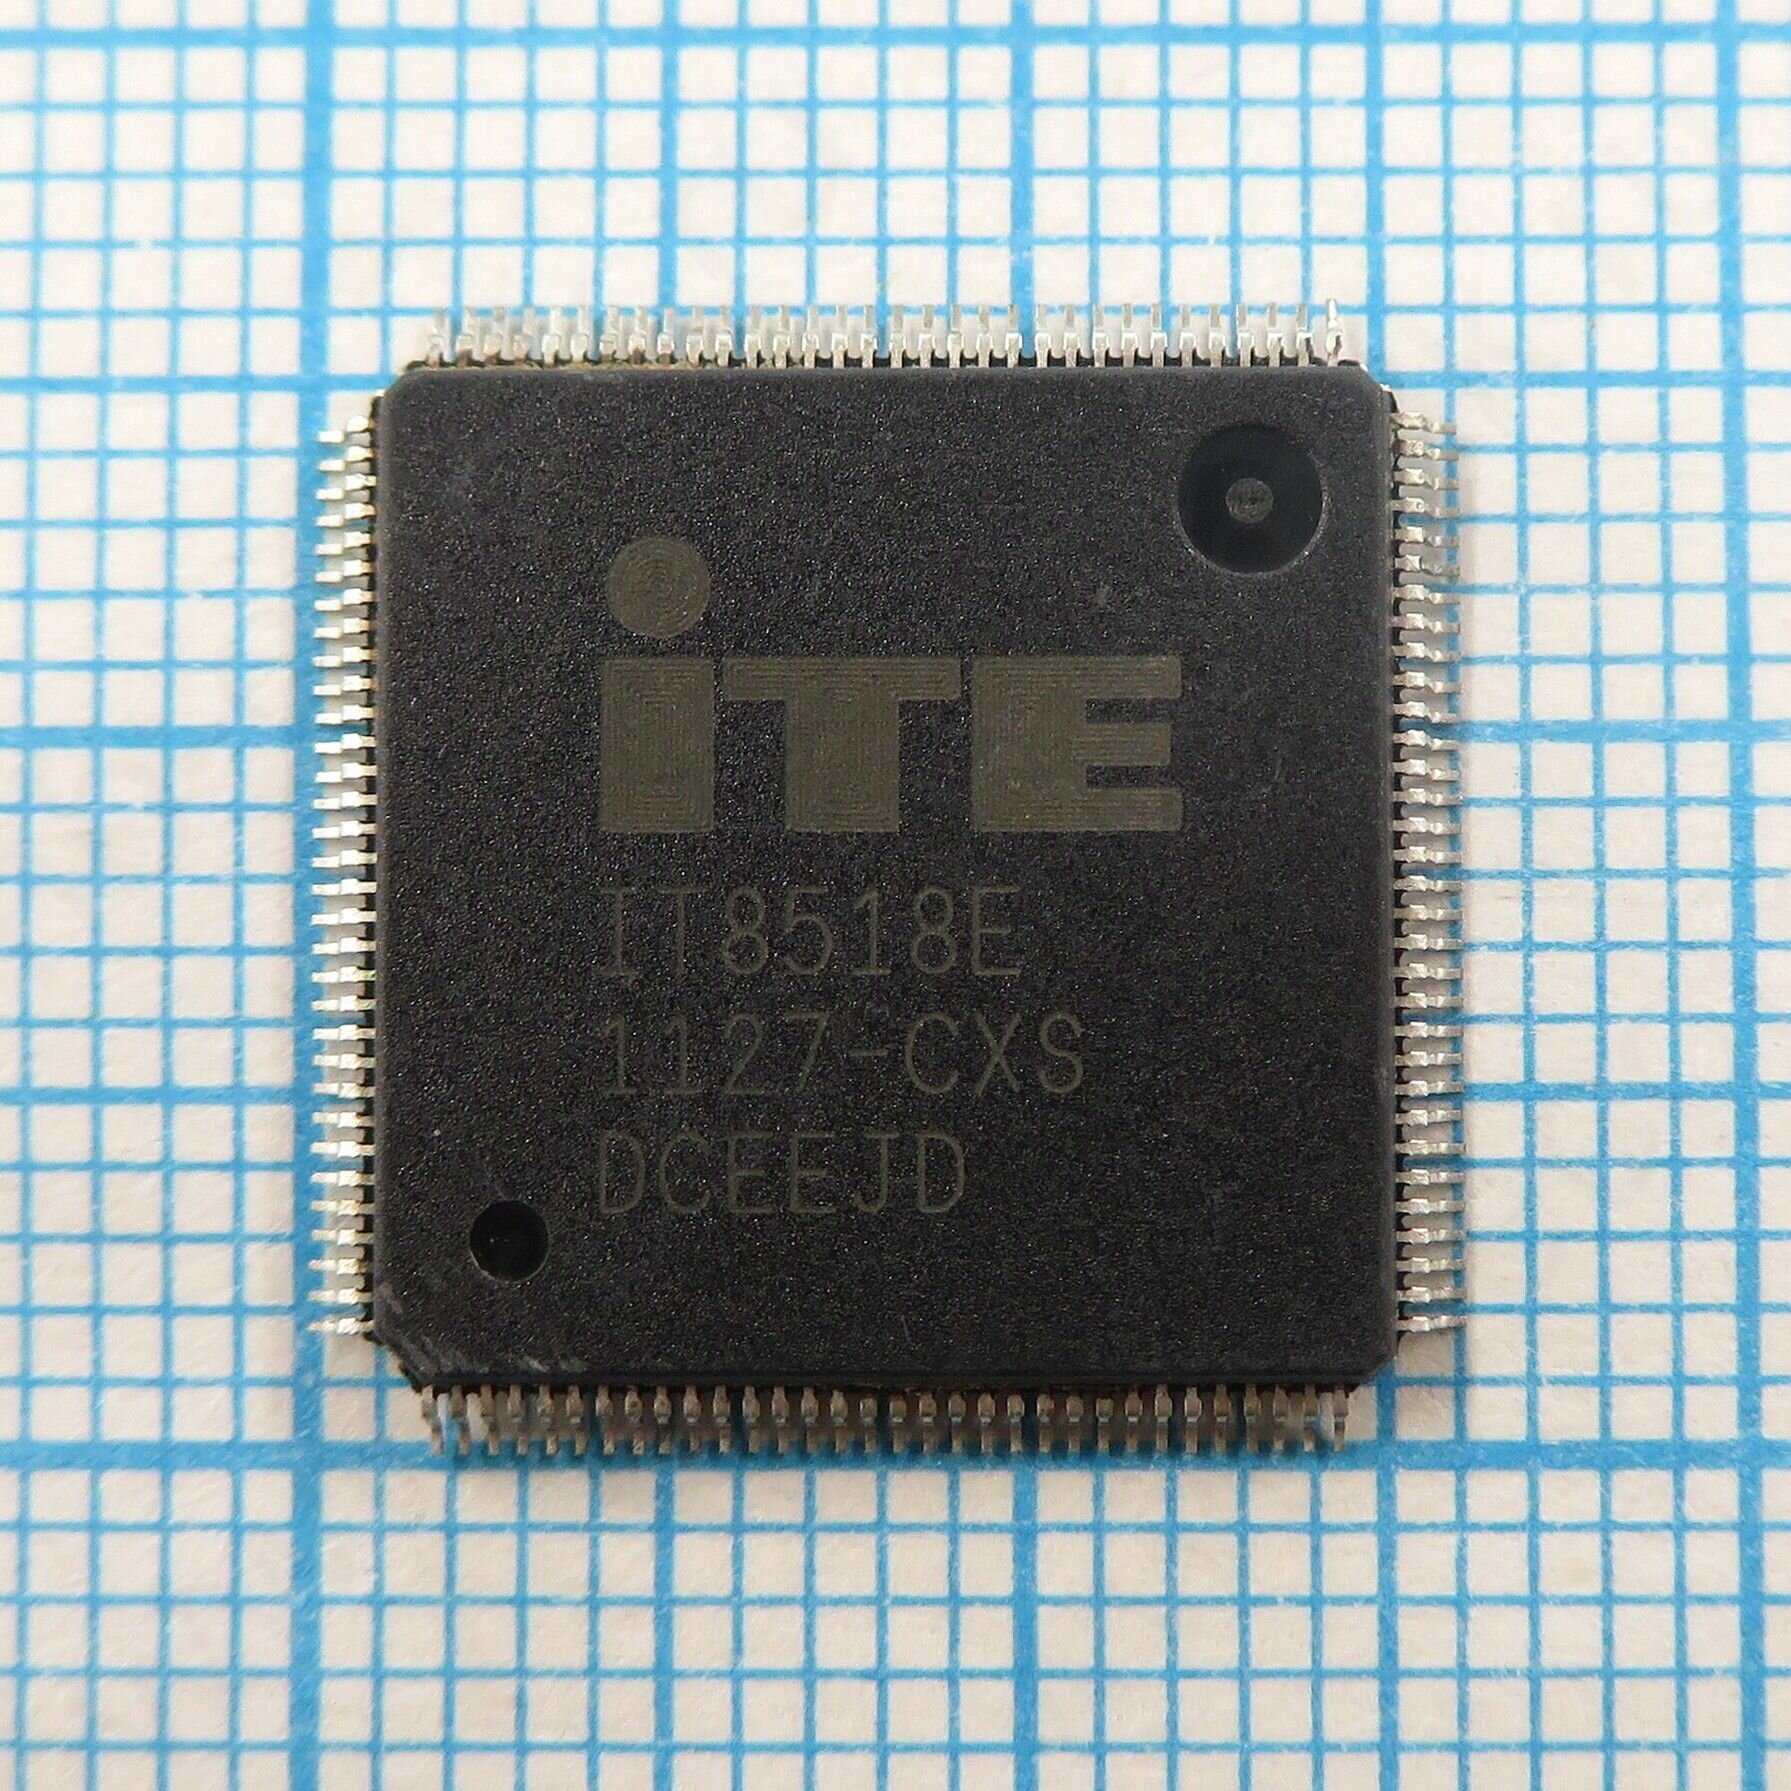 IT8518E CXS IT8518E-CXS - Мультиконтроллер